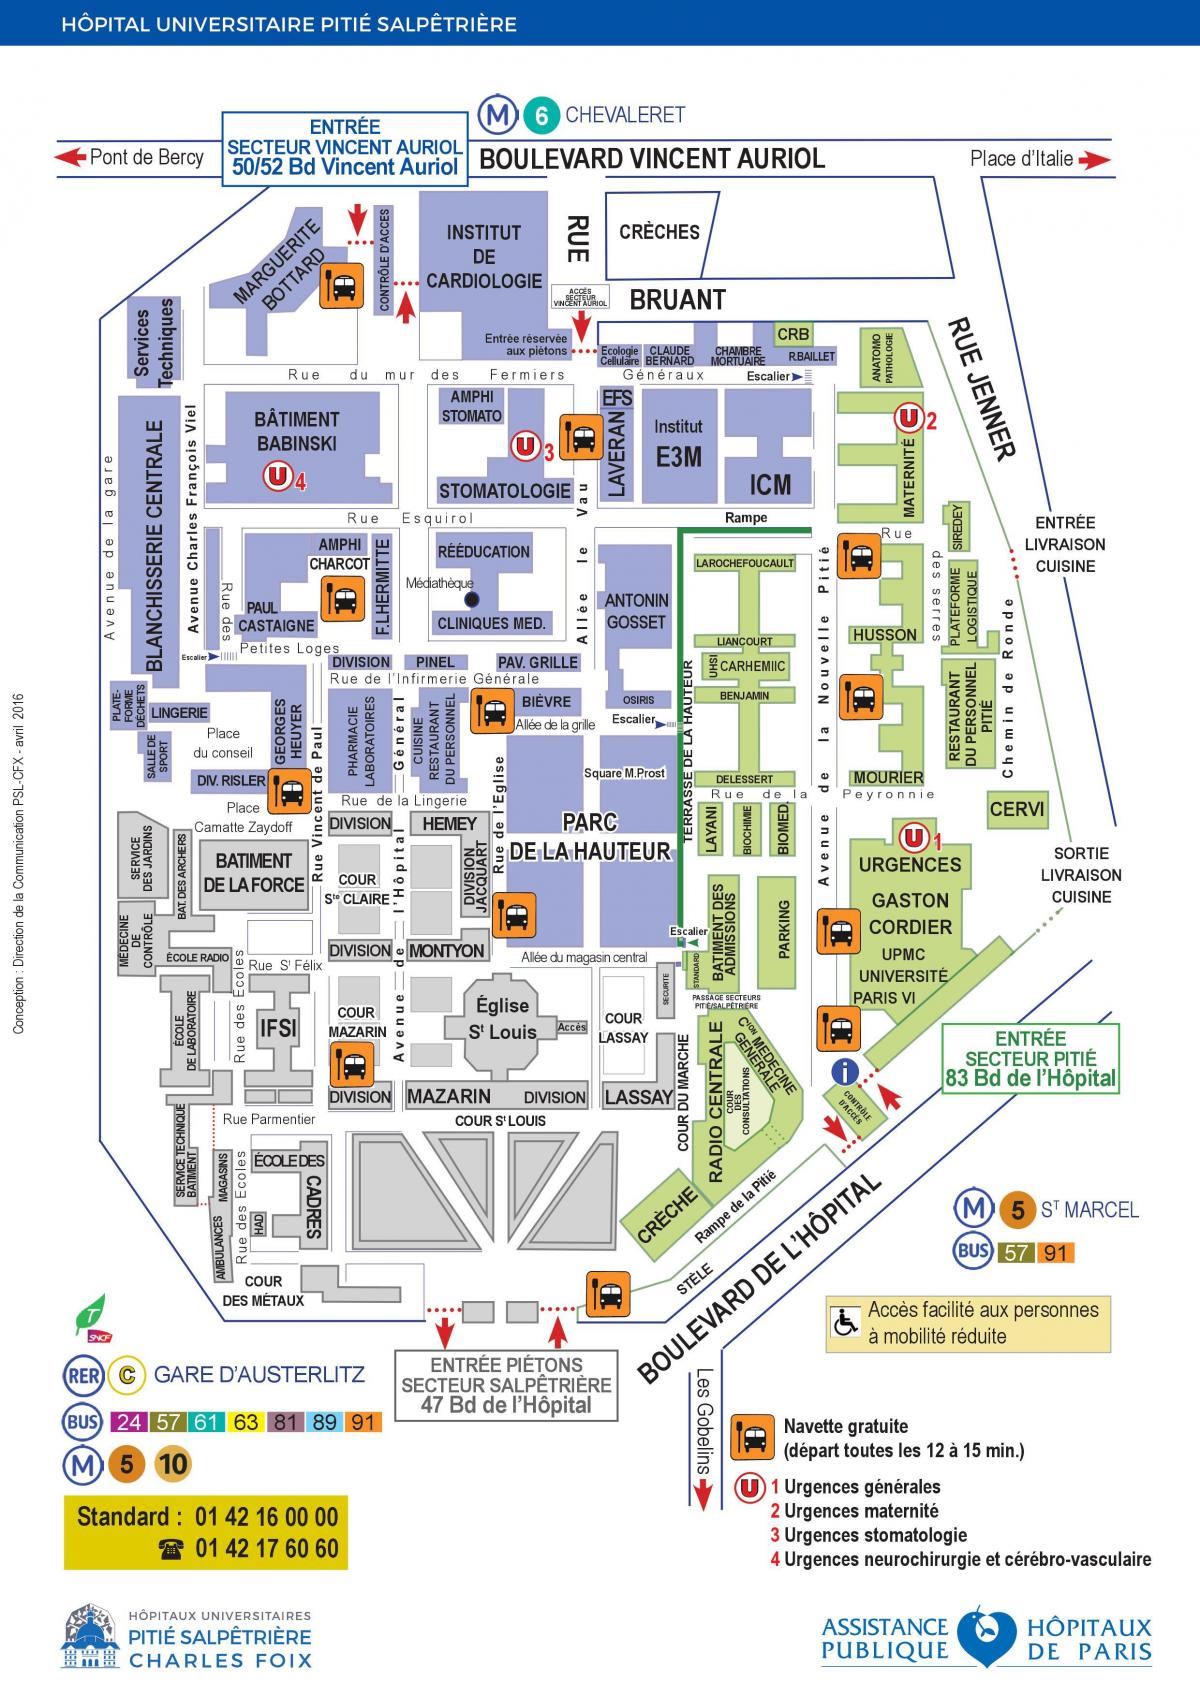 Harta e Pitie spitalin Salpetriere